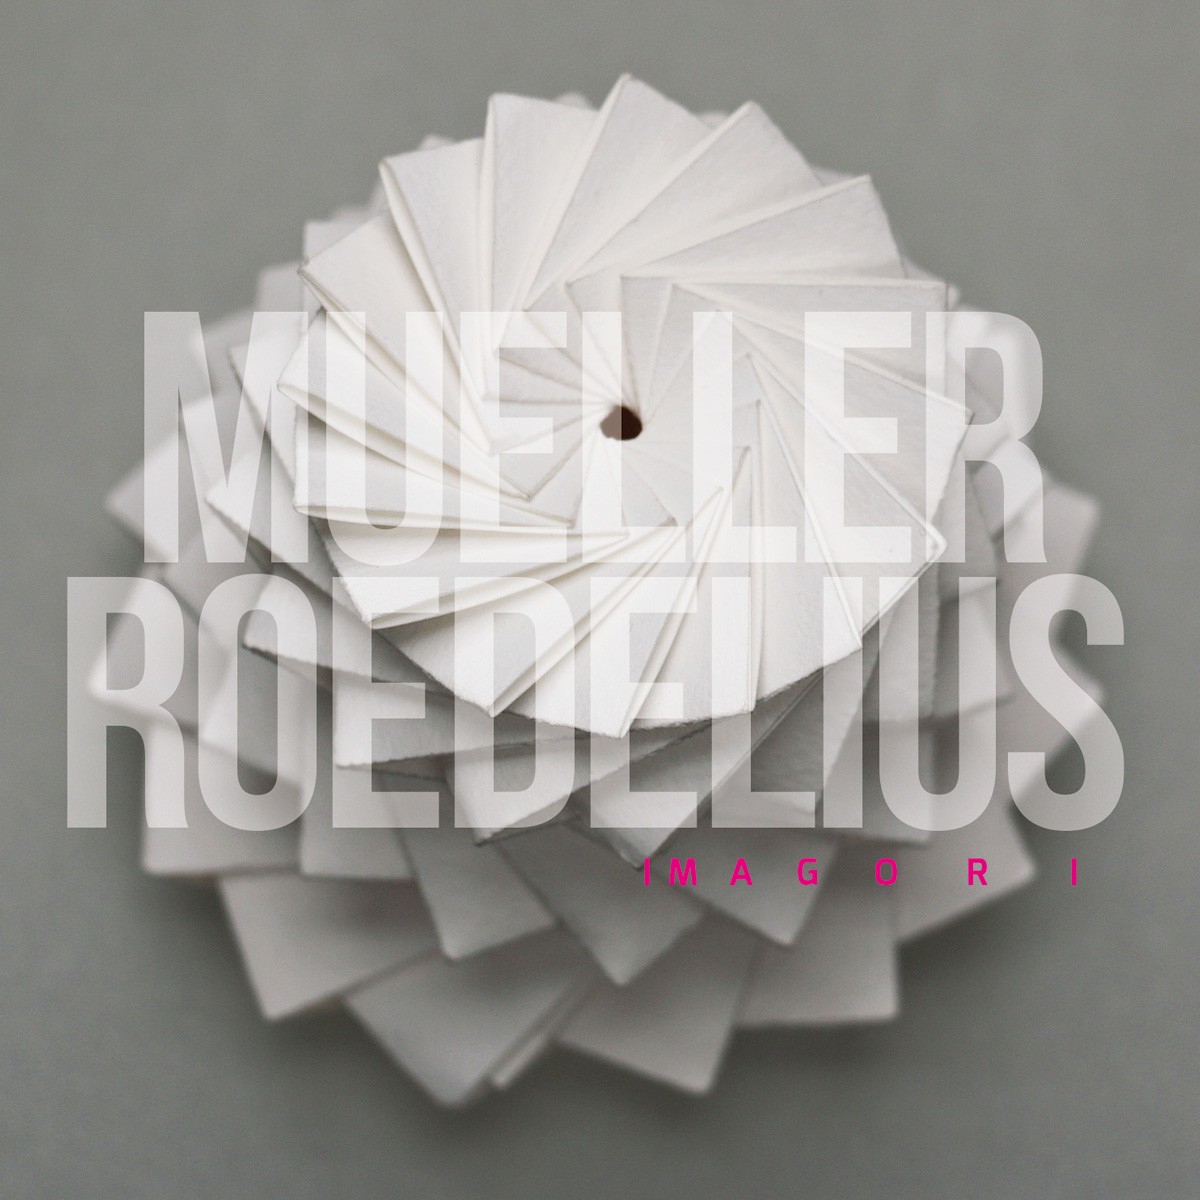 MUELLER_ROEDELIUS - IMAGORI Pre Order